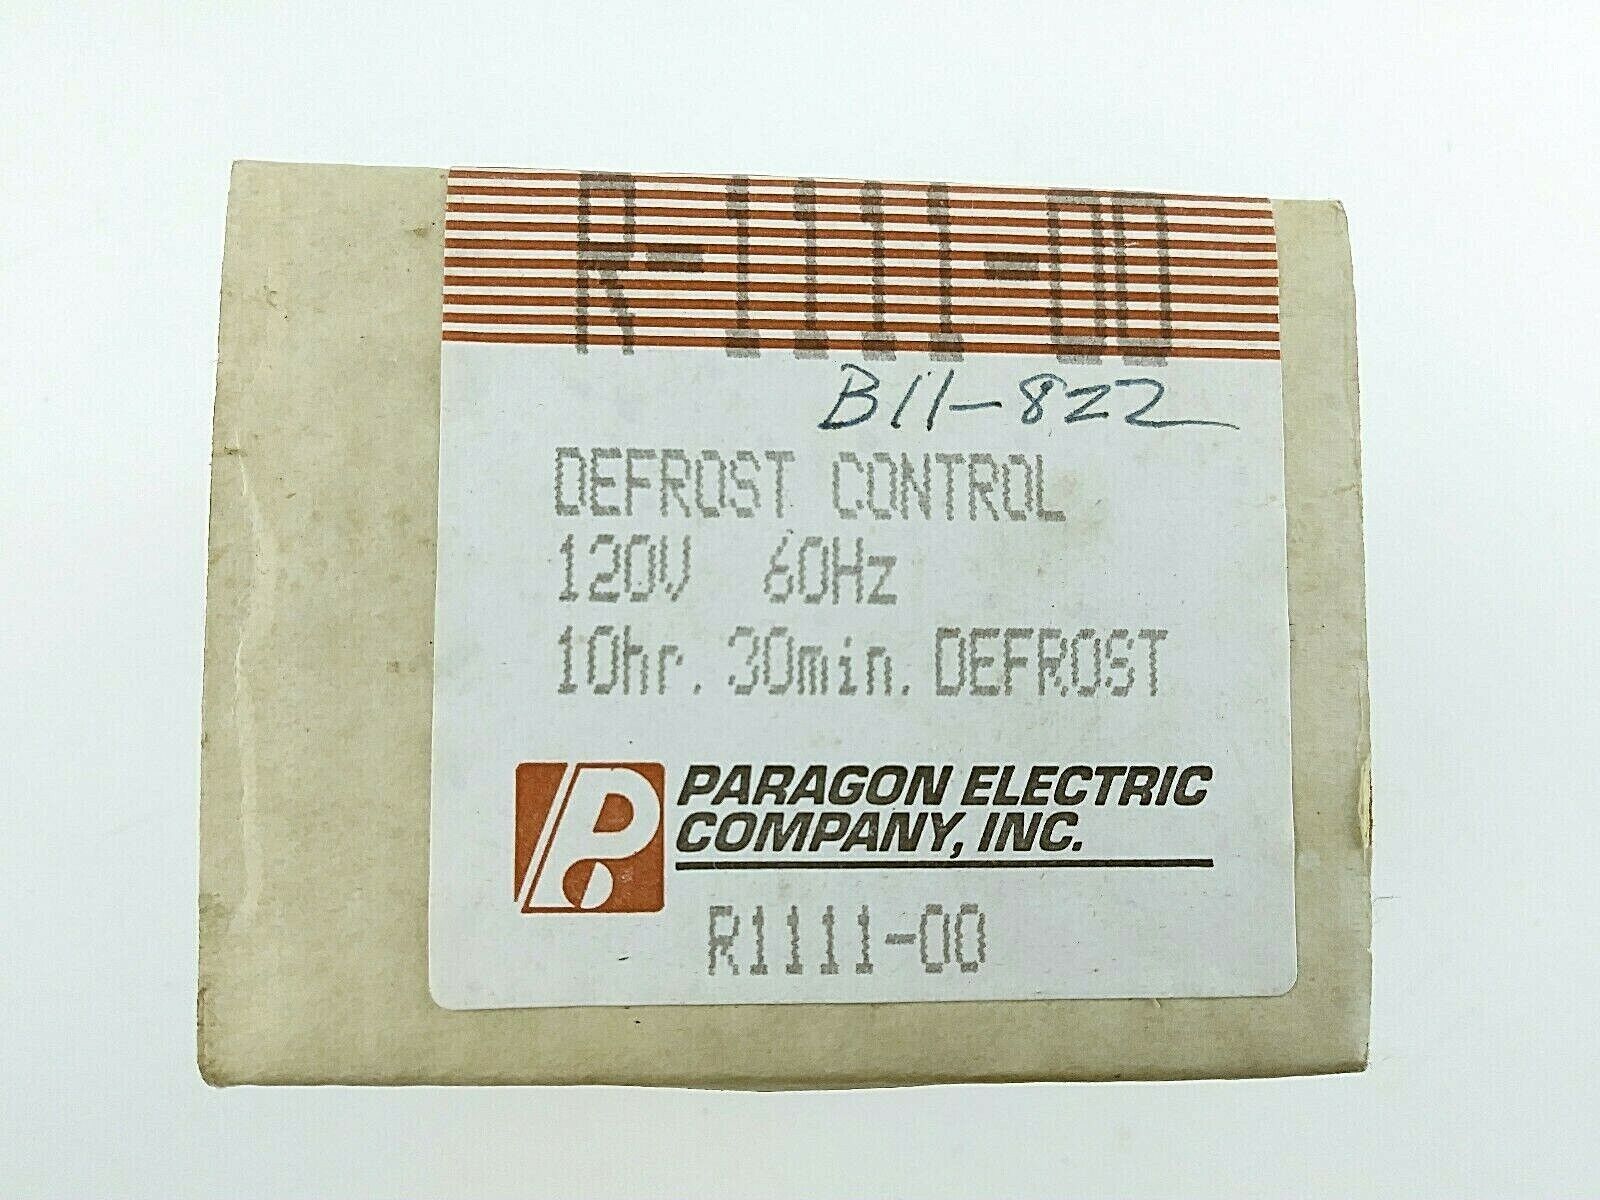  Paragon Electric Defrost Control R-1111-00 B11-822 120V 60HZ 10 Hr. 30 min. 